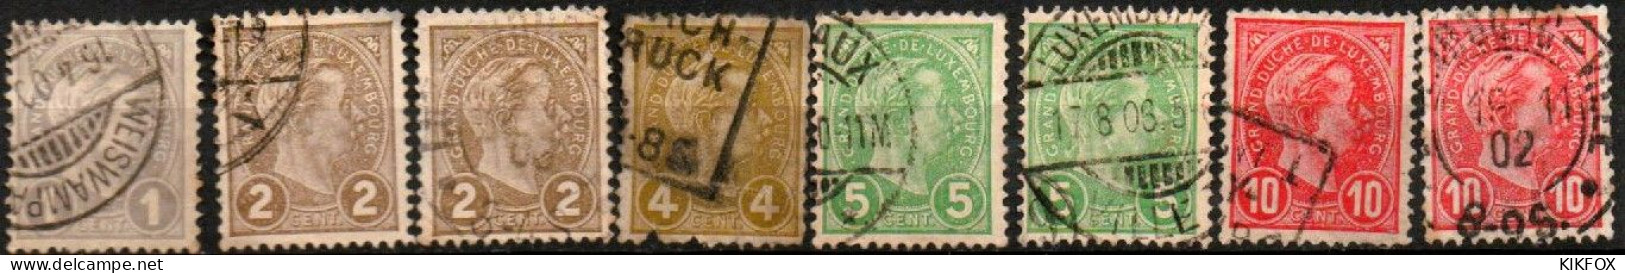 Luxembourg , Luxemburg ,1895, MI 67 - 71, YT 69 - 73,  GROSSHERZOG ADOLF, GESTEMPELT,OBLITERE, - 1895 Adolphe Right-hand Side